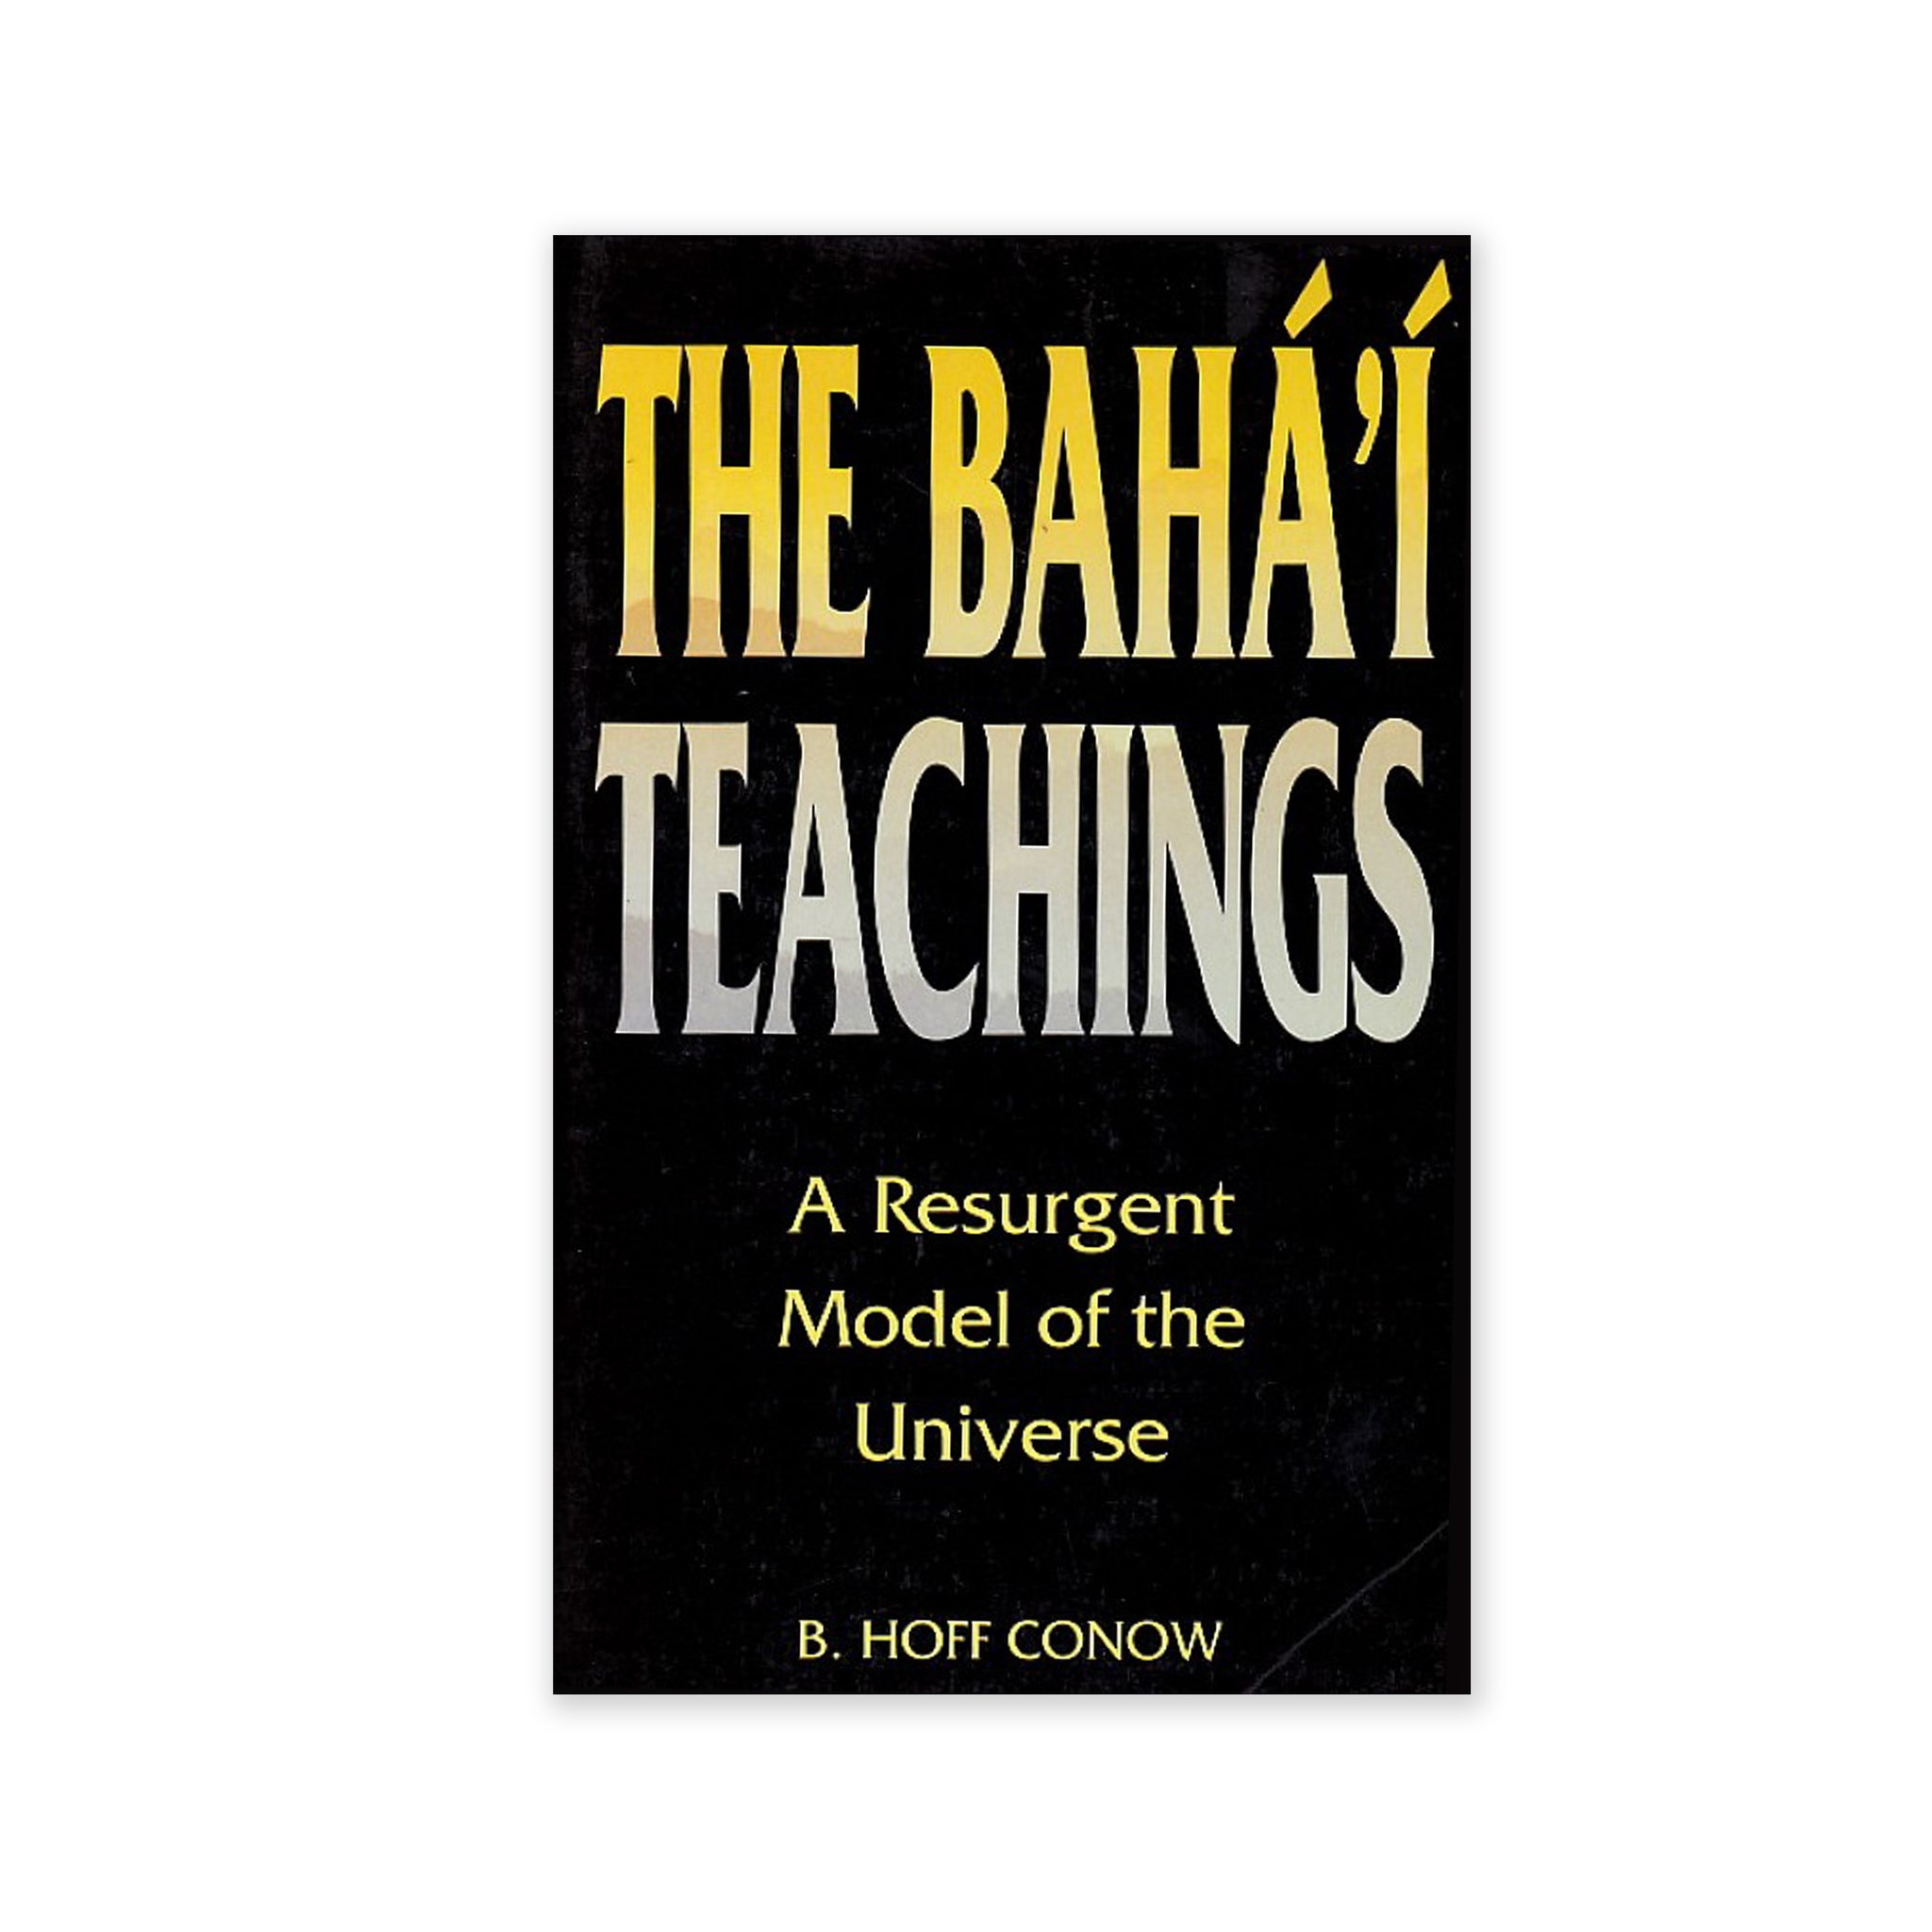 Baha'i Teachings - A Resurgent Model of the Universe